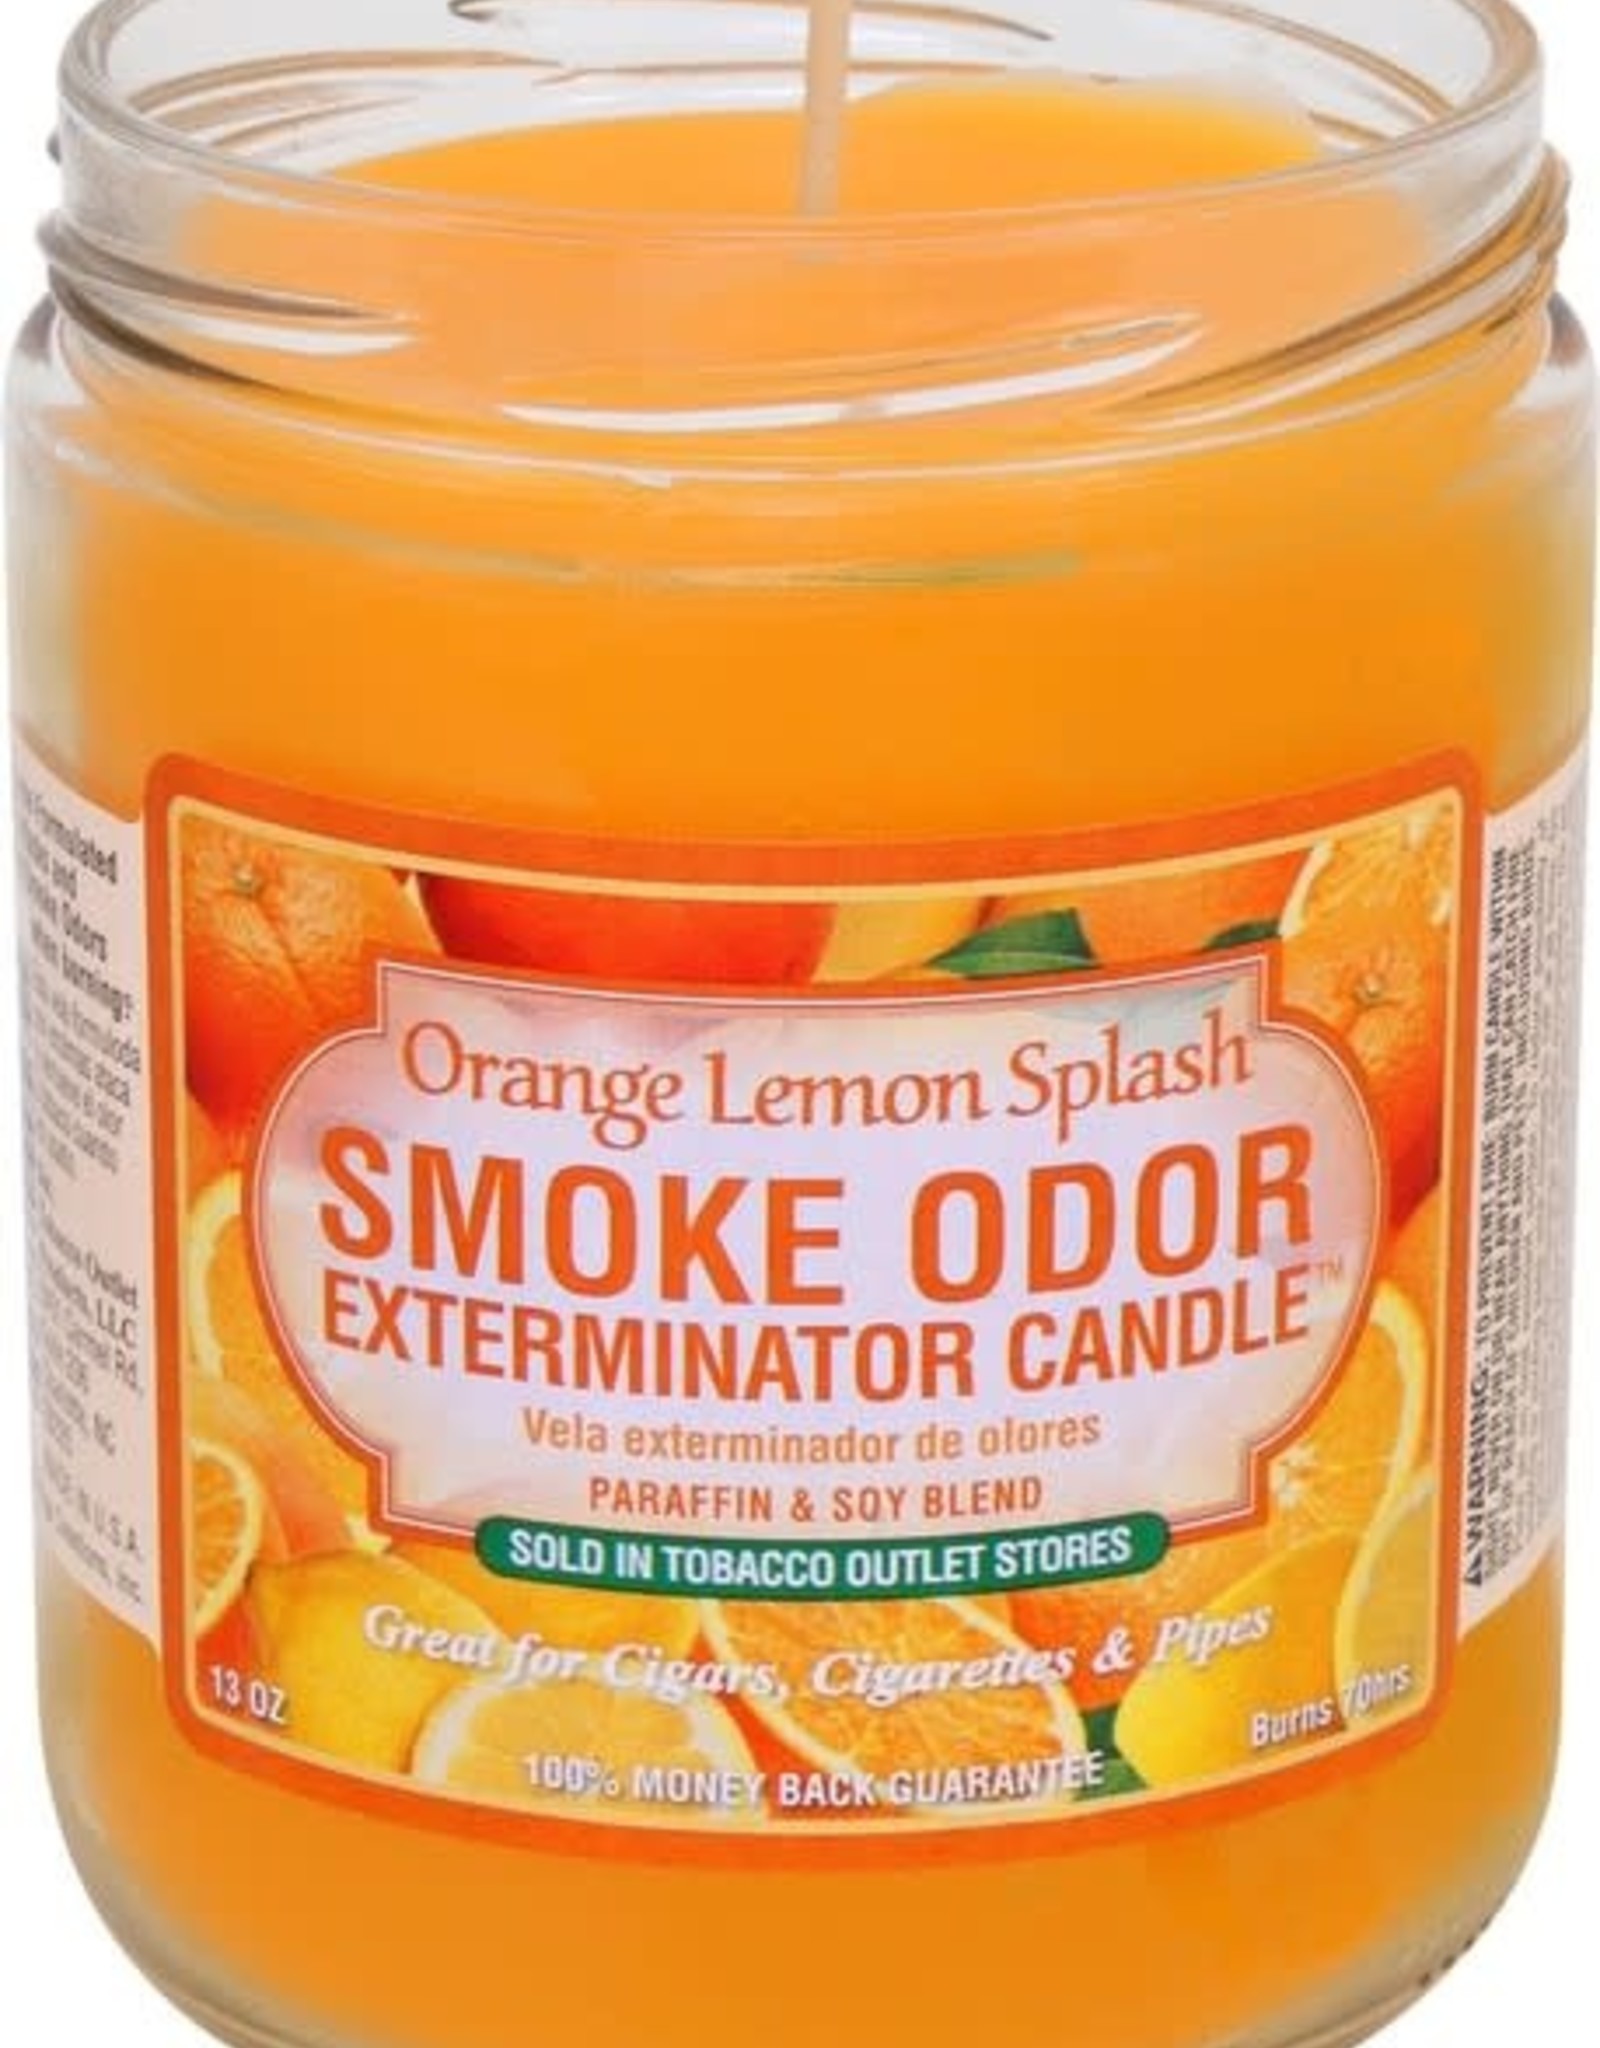 Smoke Odor Smoke Odor 13oz. Candle - Orange Lemon Splash